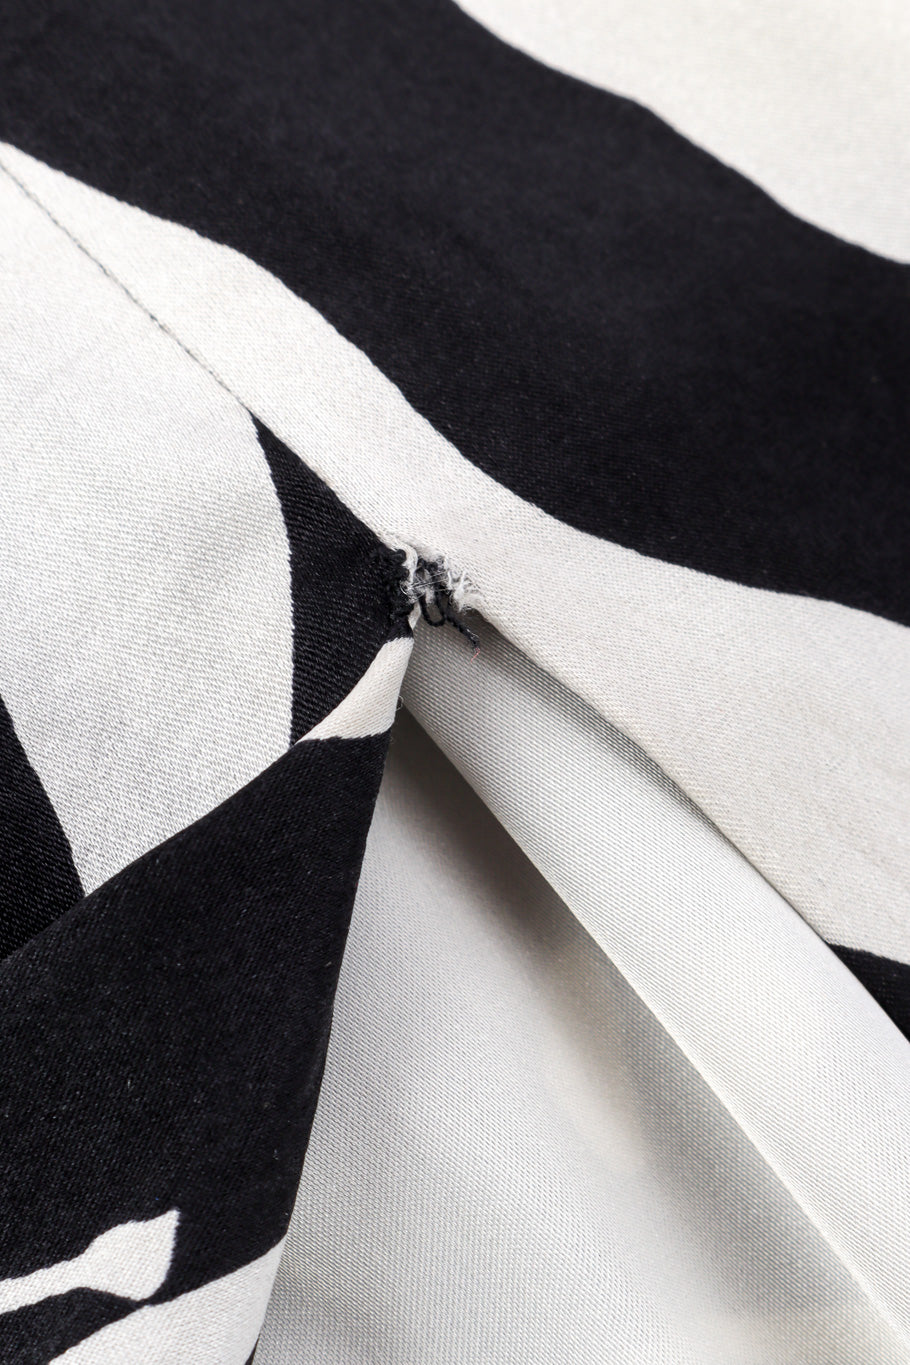 Zebra Pencil Dress by Dolce & Gabbana snag @recessla